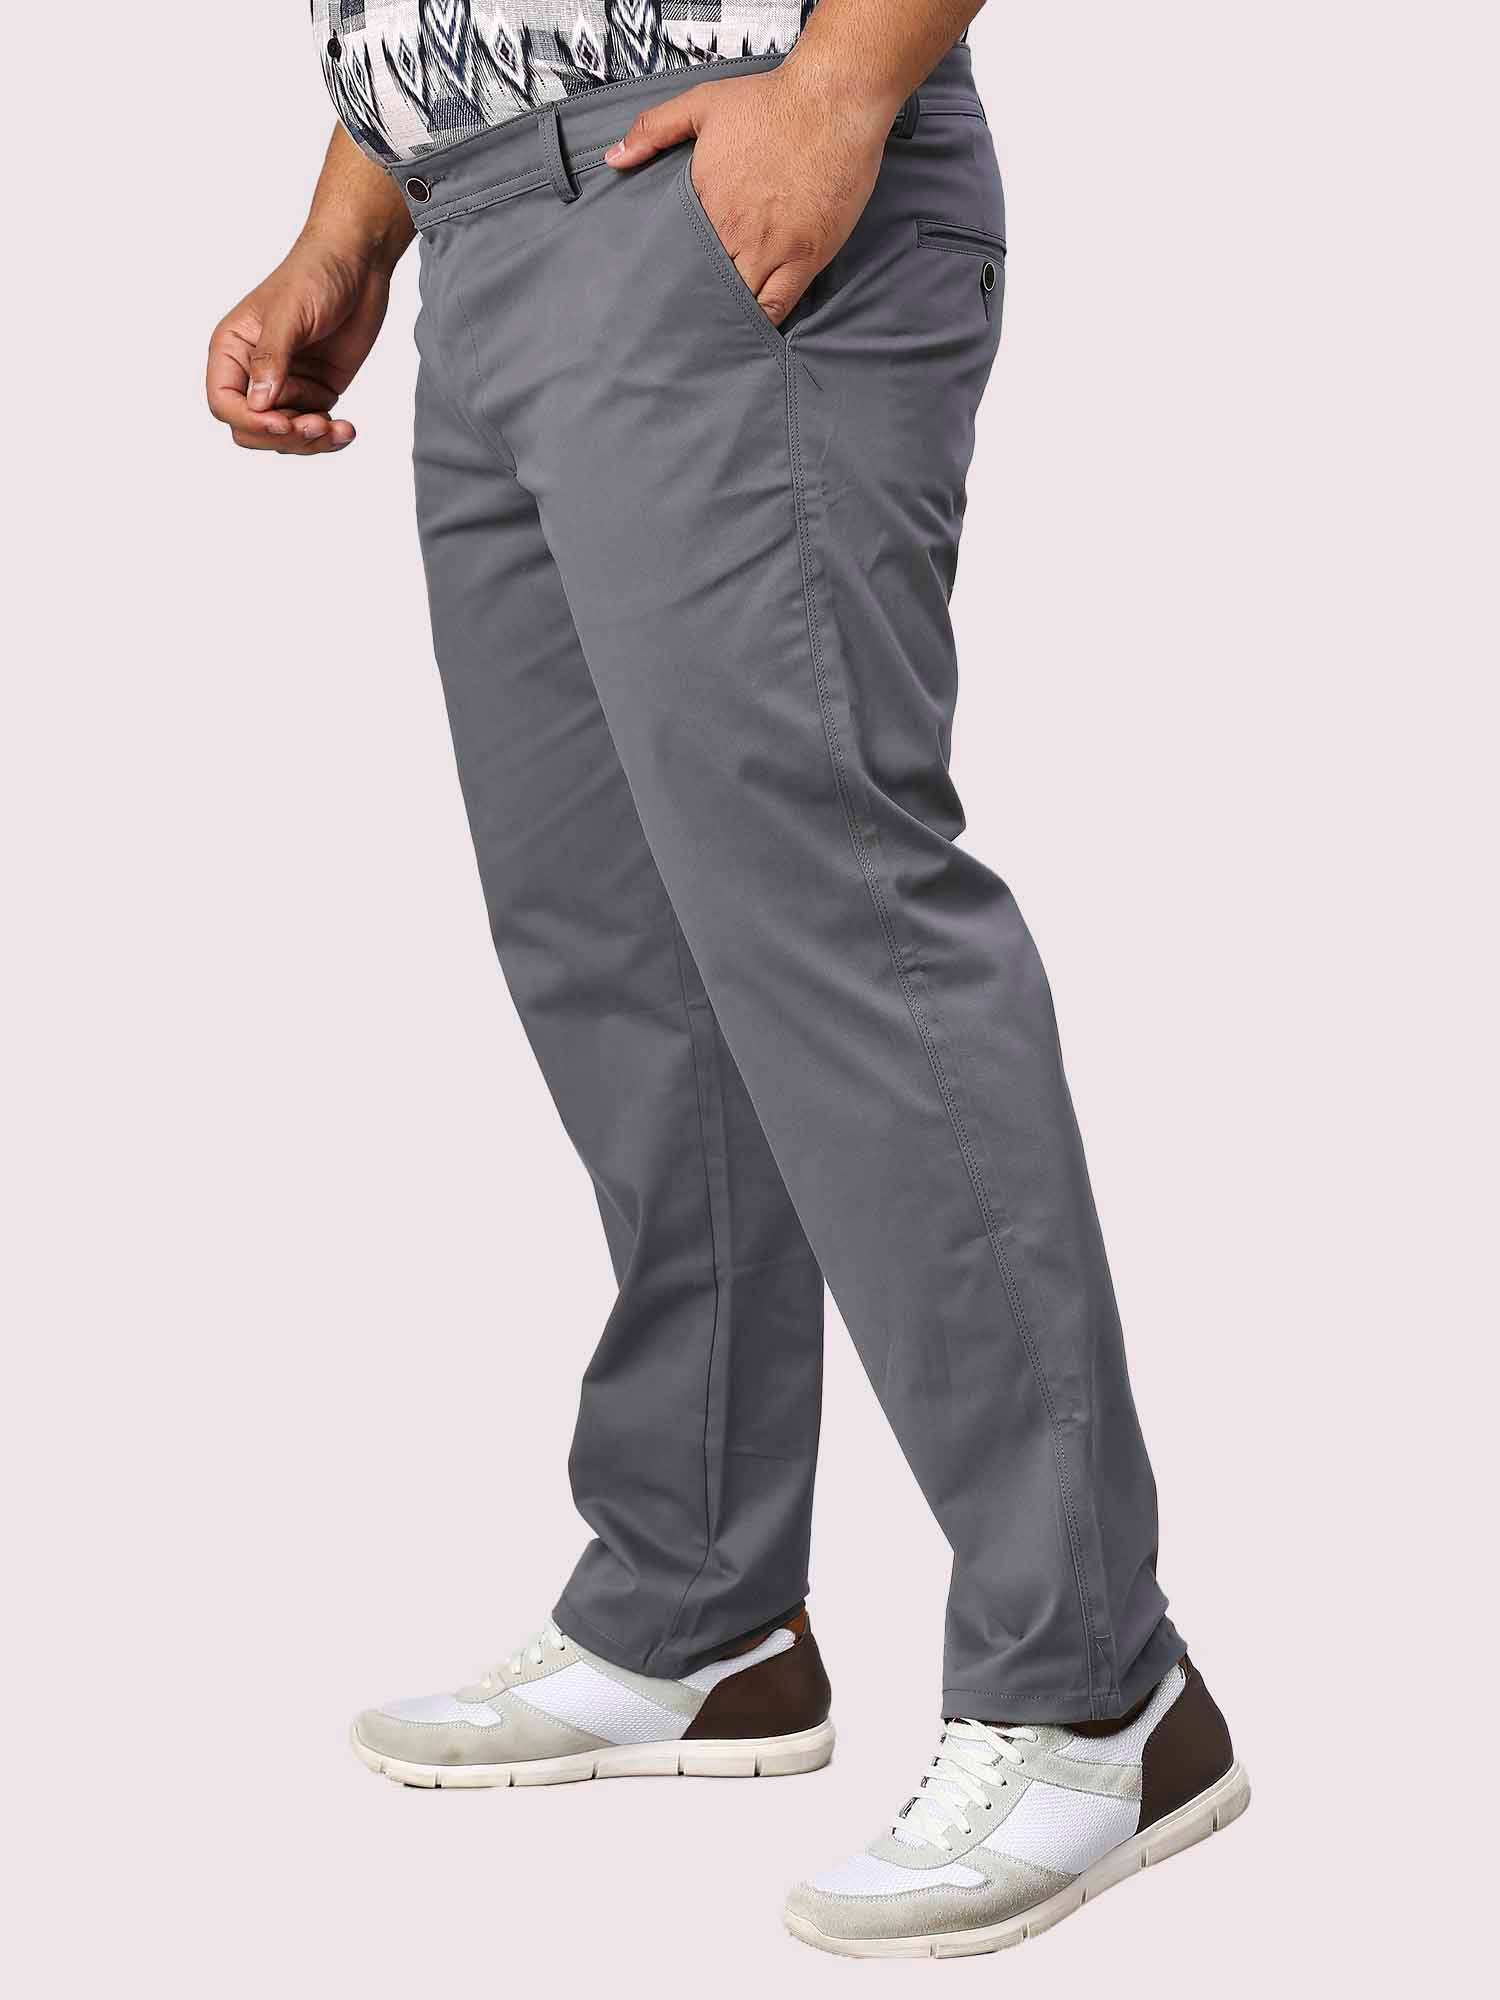 Grey Solid Cotton Trouser Men's Plus Size - Guniaa Fashions